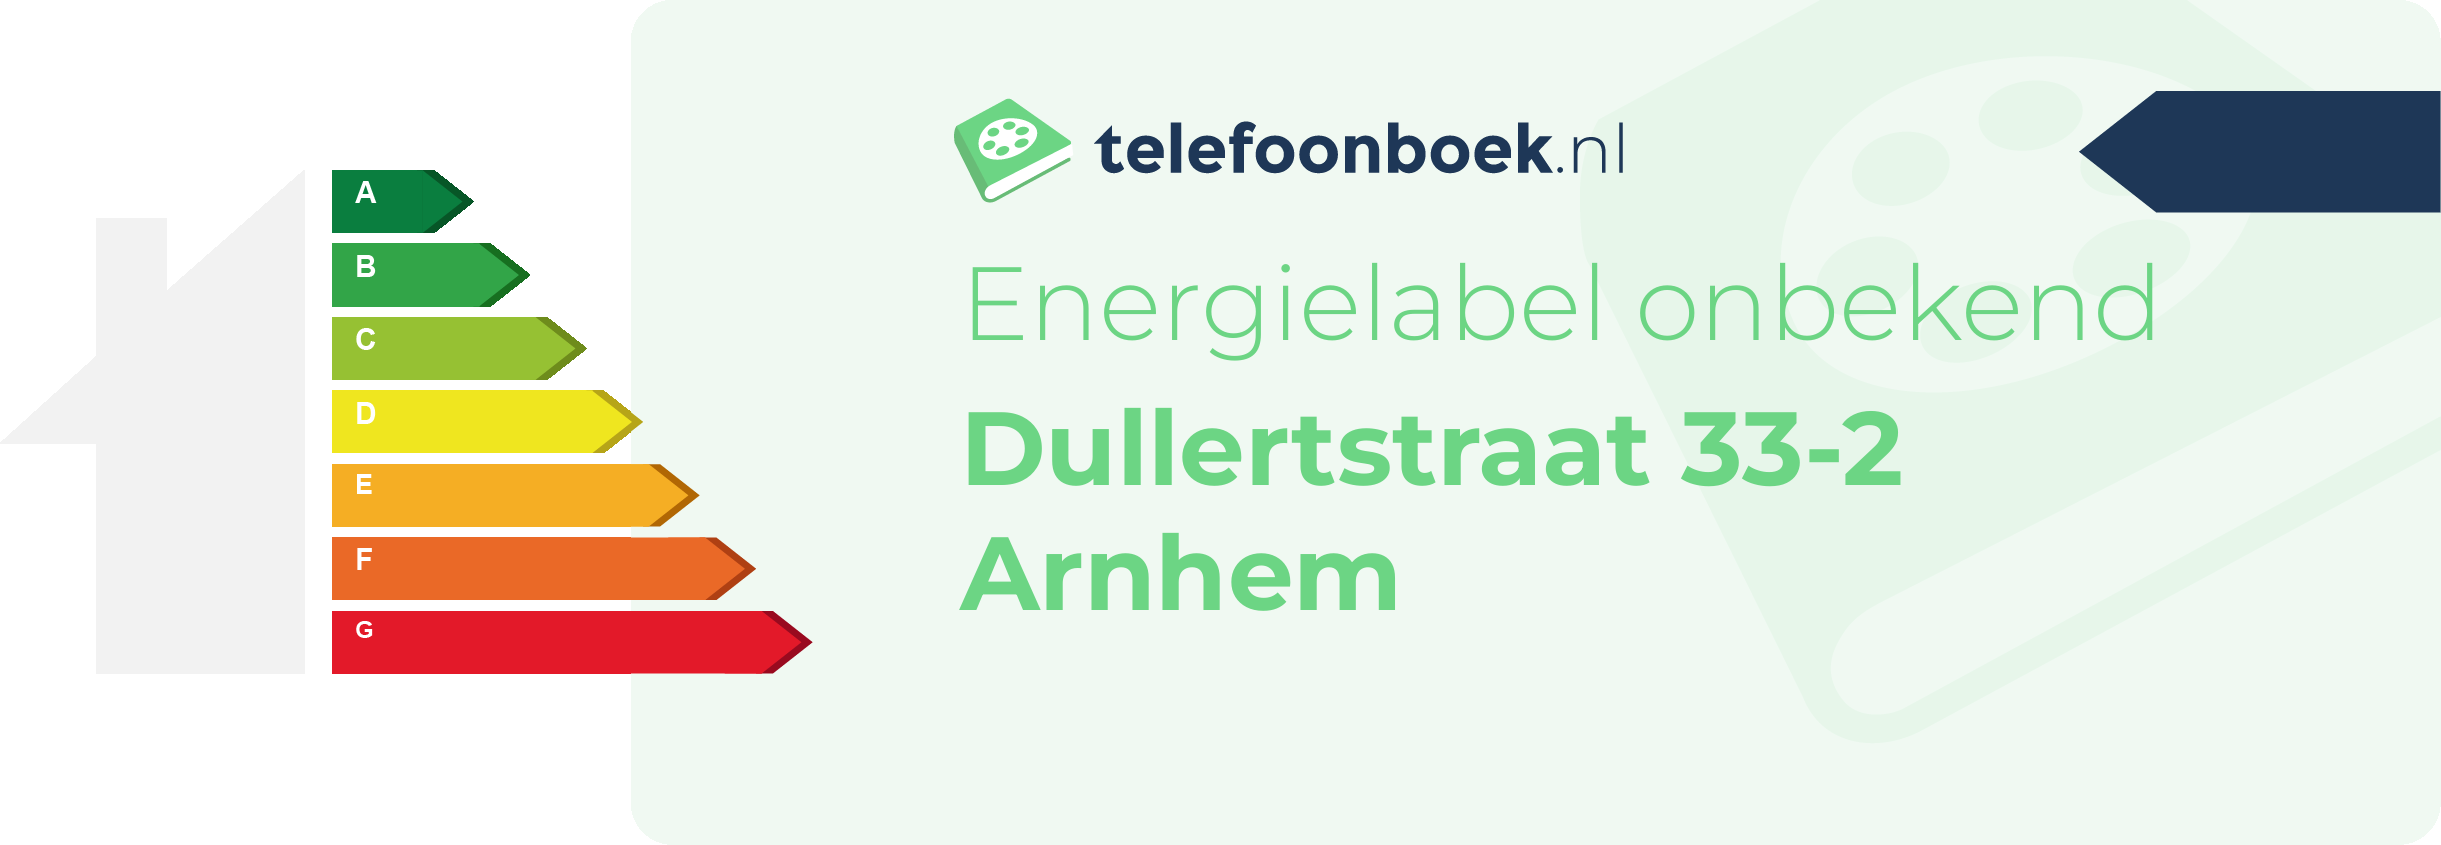 Energielabel Dullertstraat 33-2 Arnhem